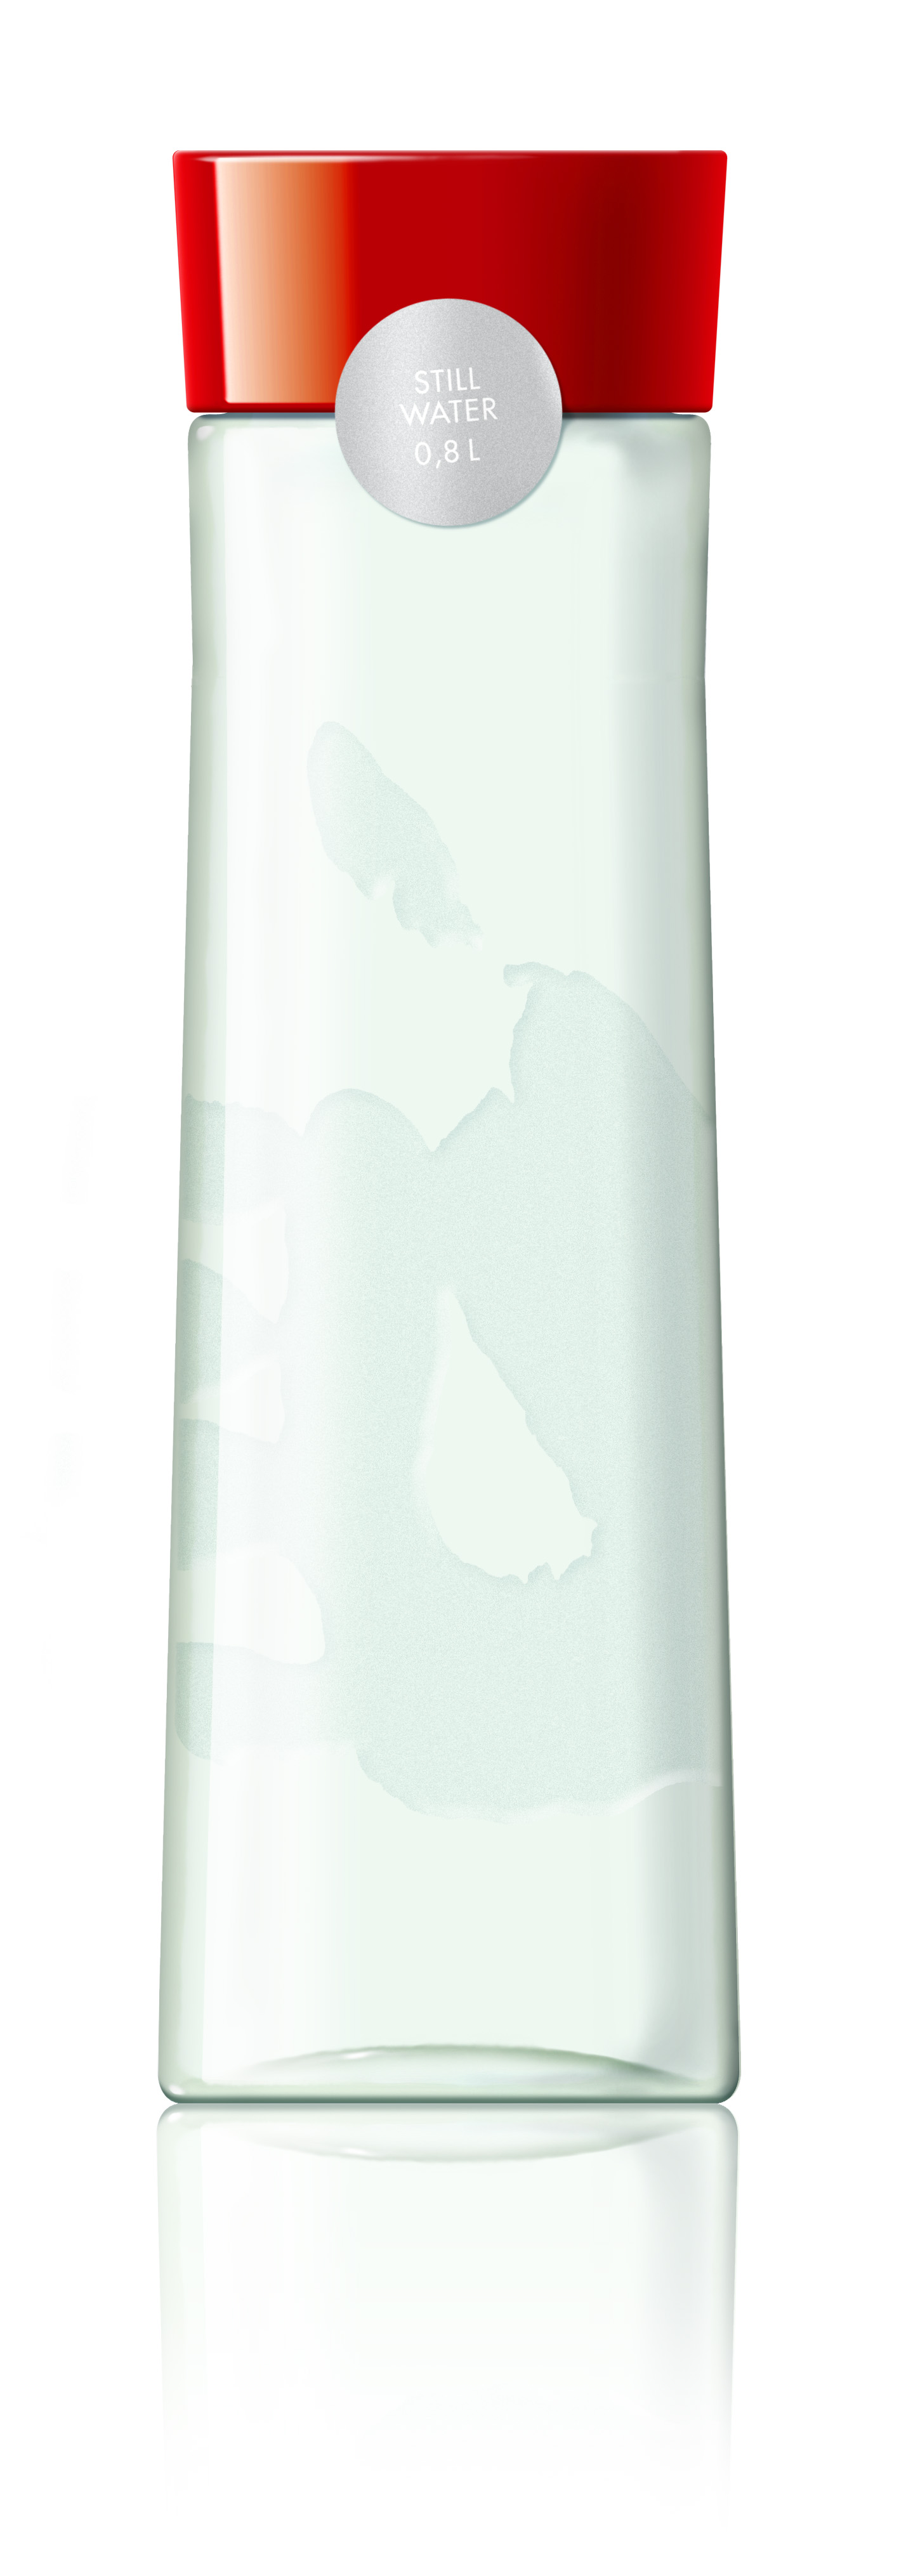 Scandic's own designed water bottle